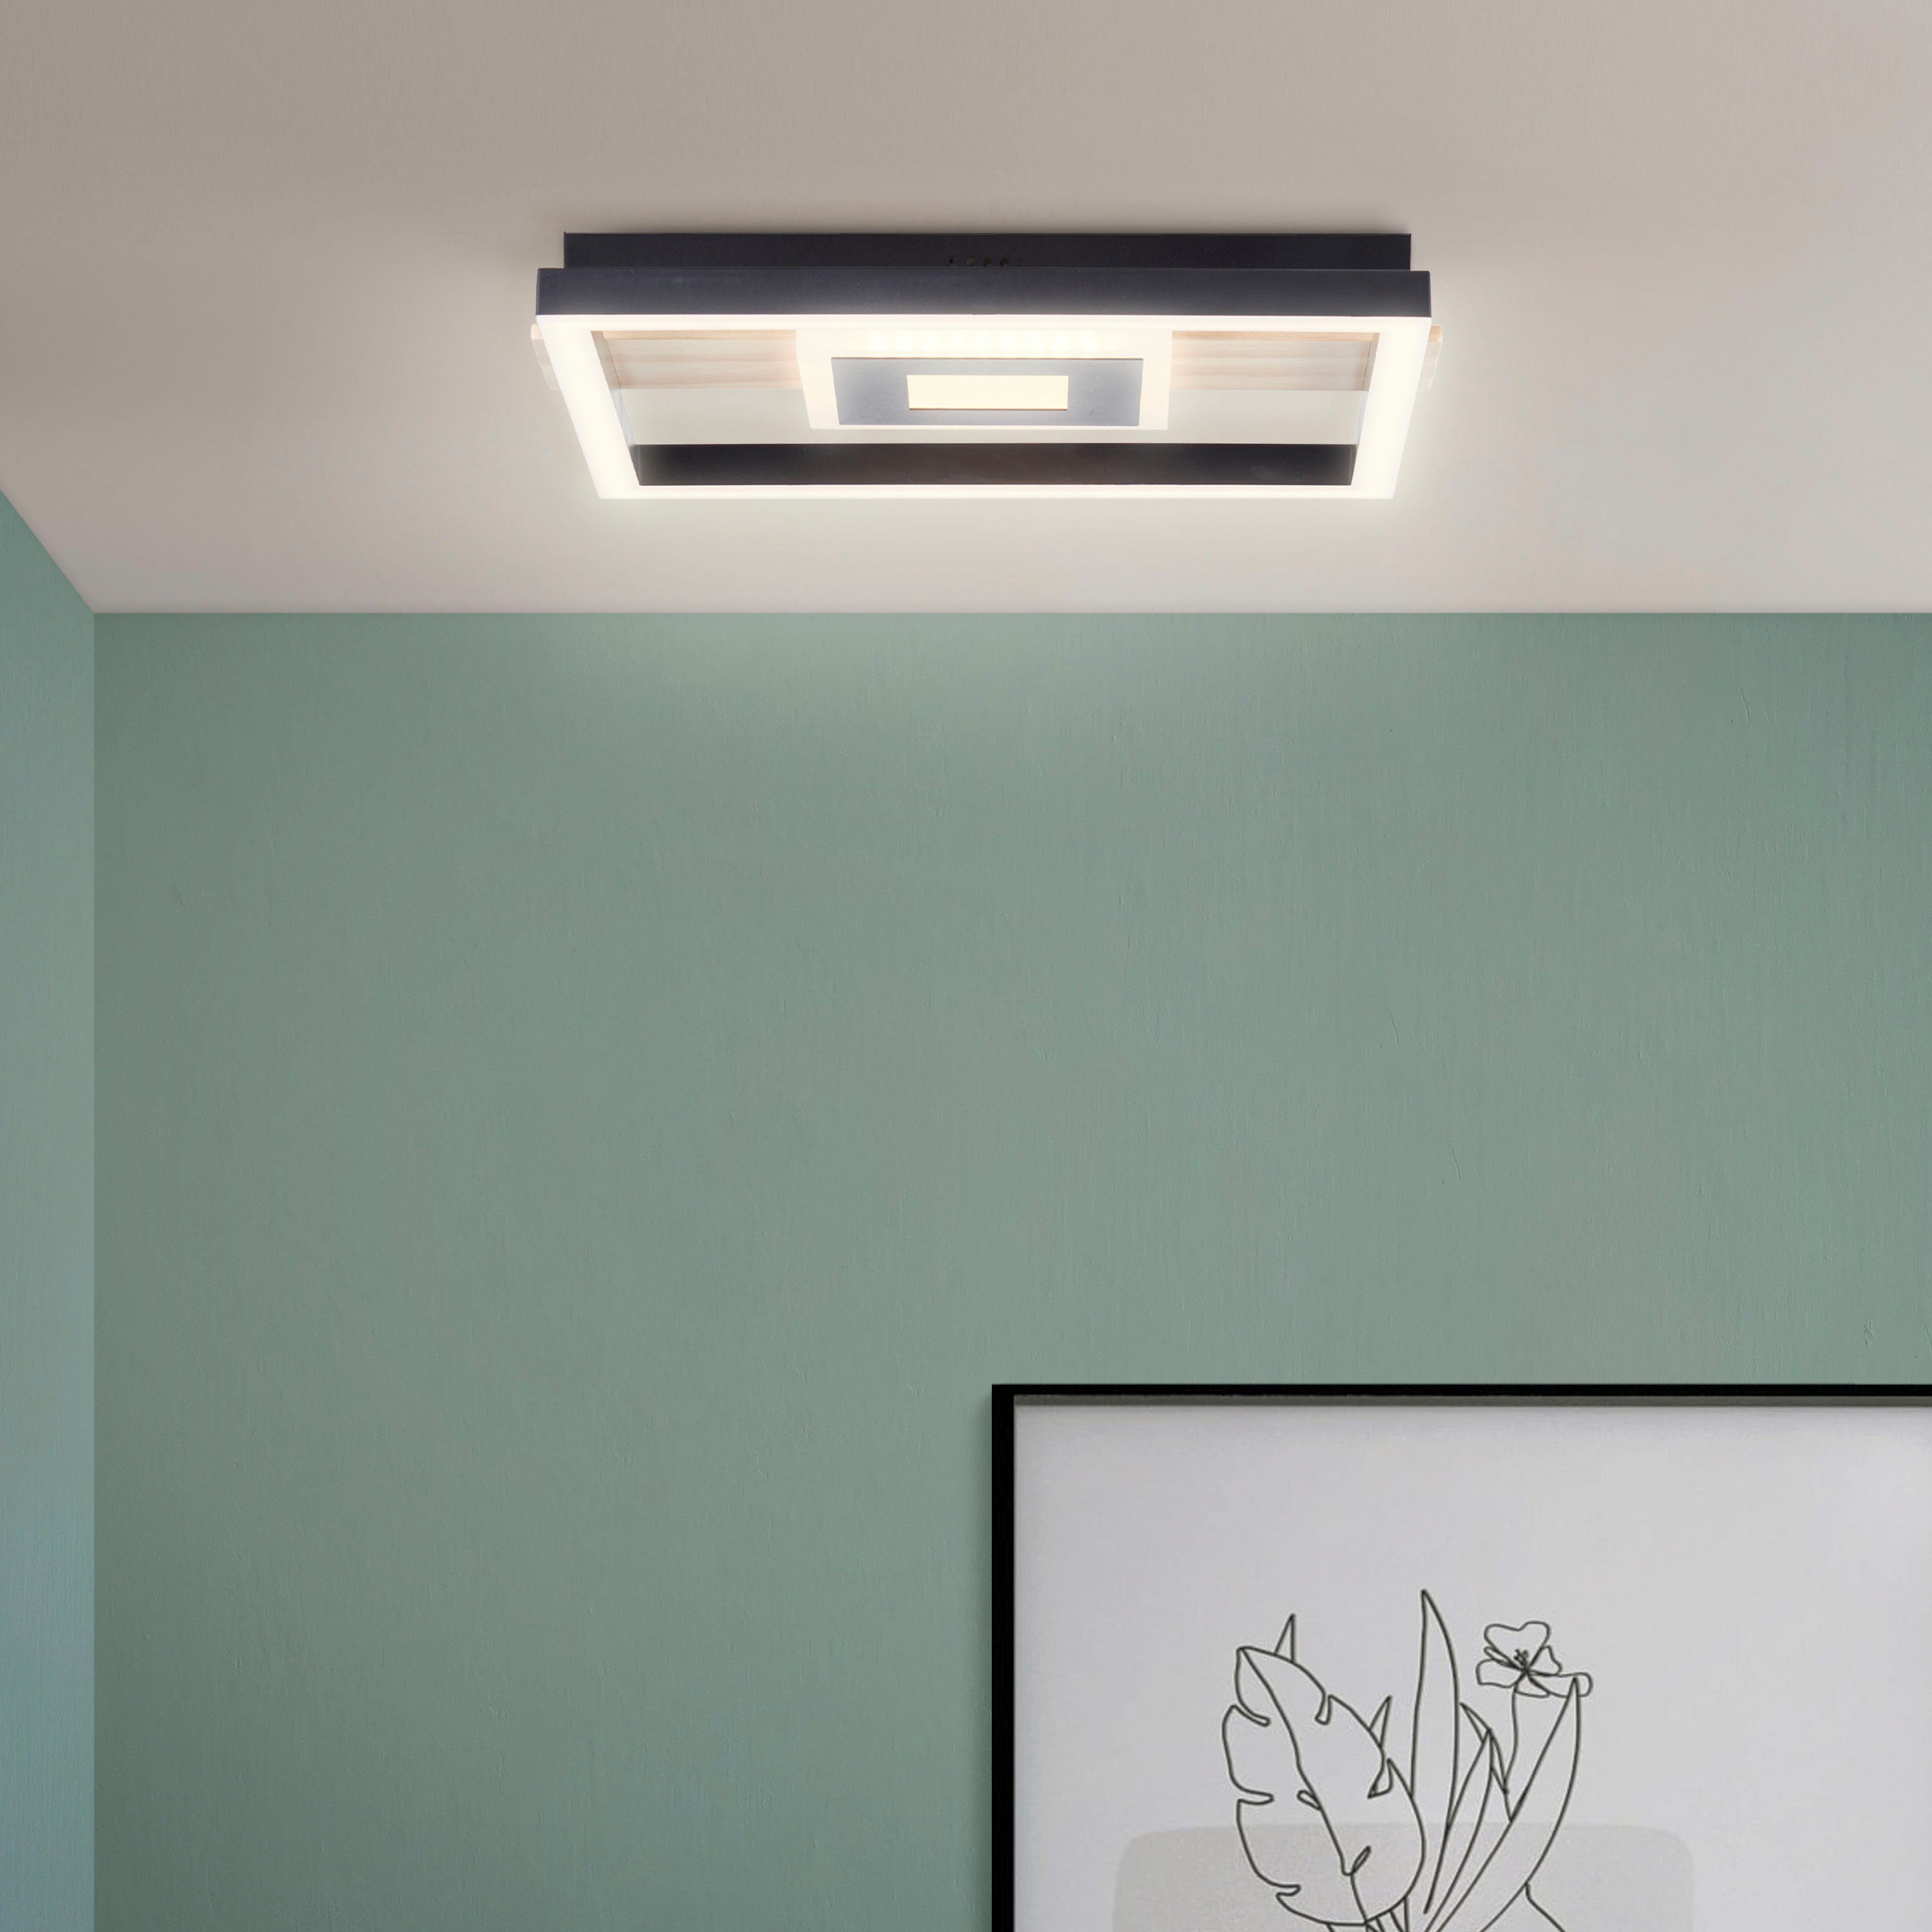 home LED Deckenleuchte 24 integriert, Warmweiß, 30 cm, x braun/schwarz fest LED 2600 3000 lm, K, Lysann, Holz/Metall, my W, 28